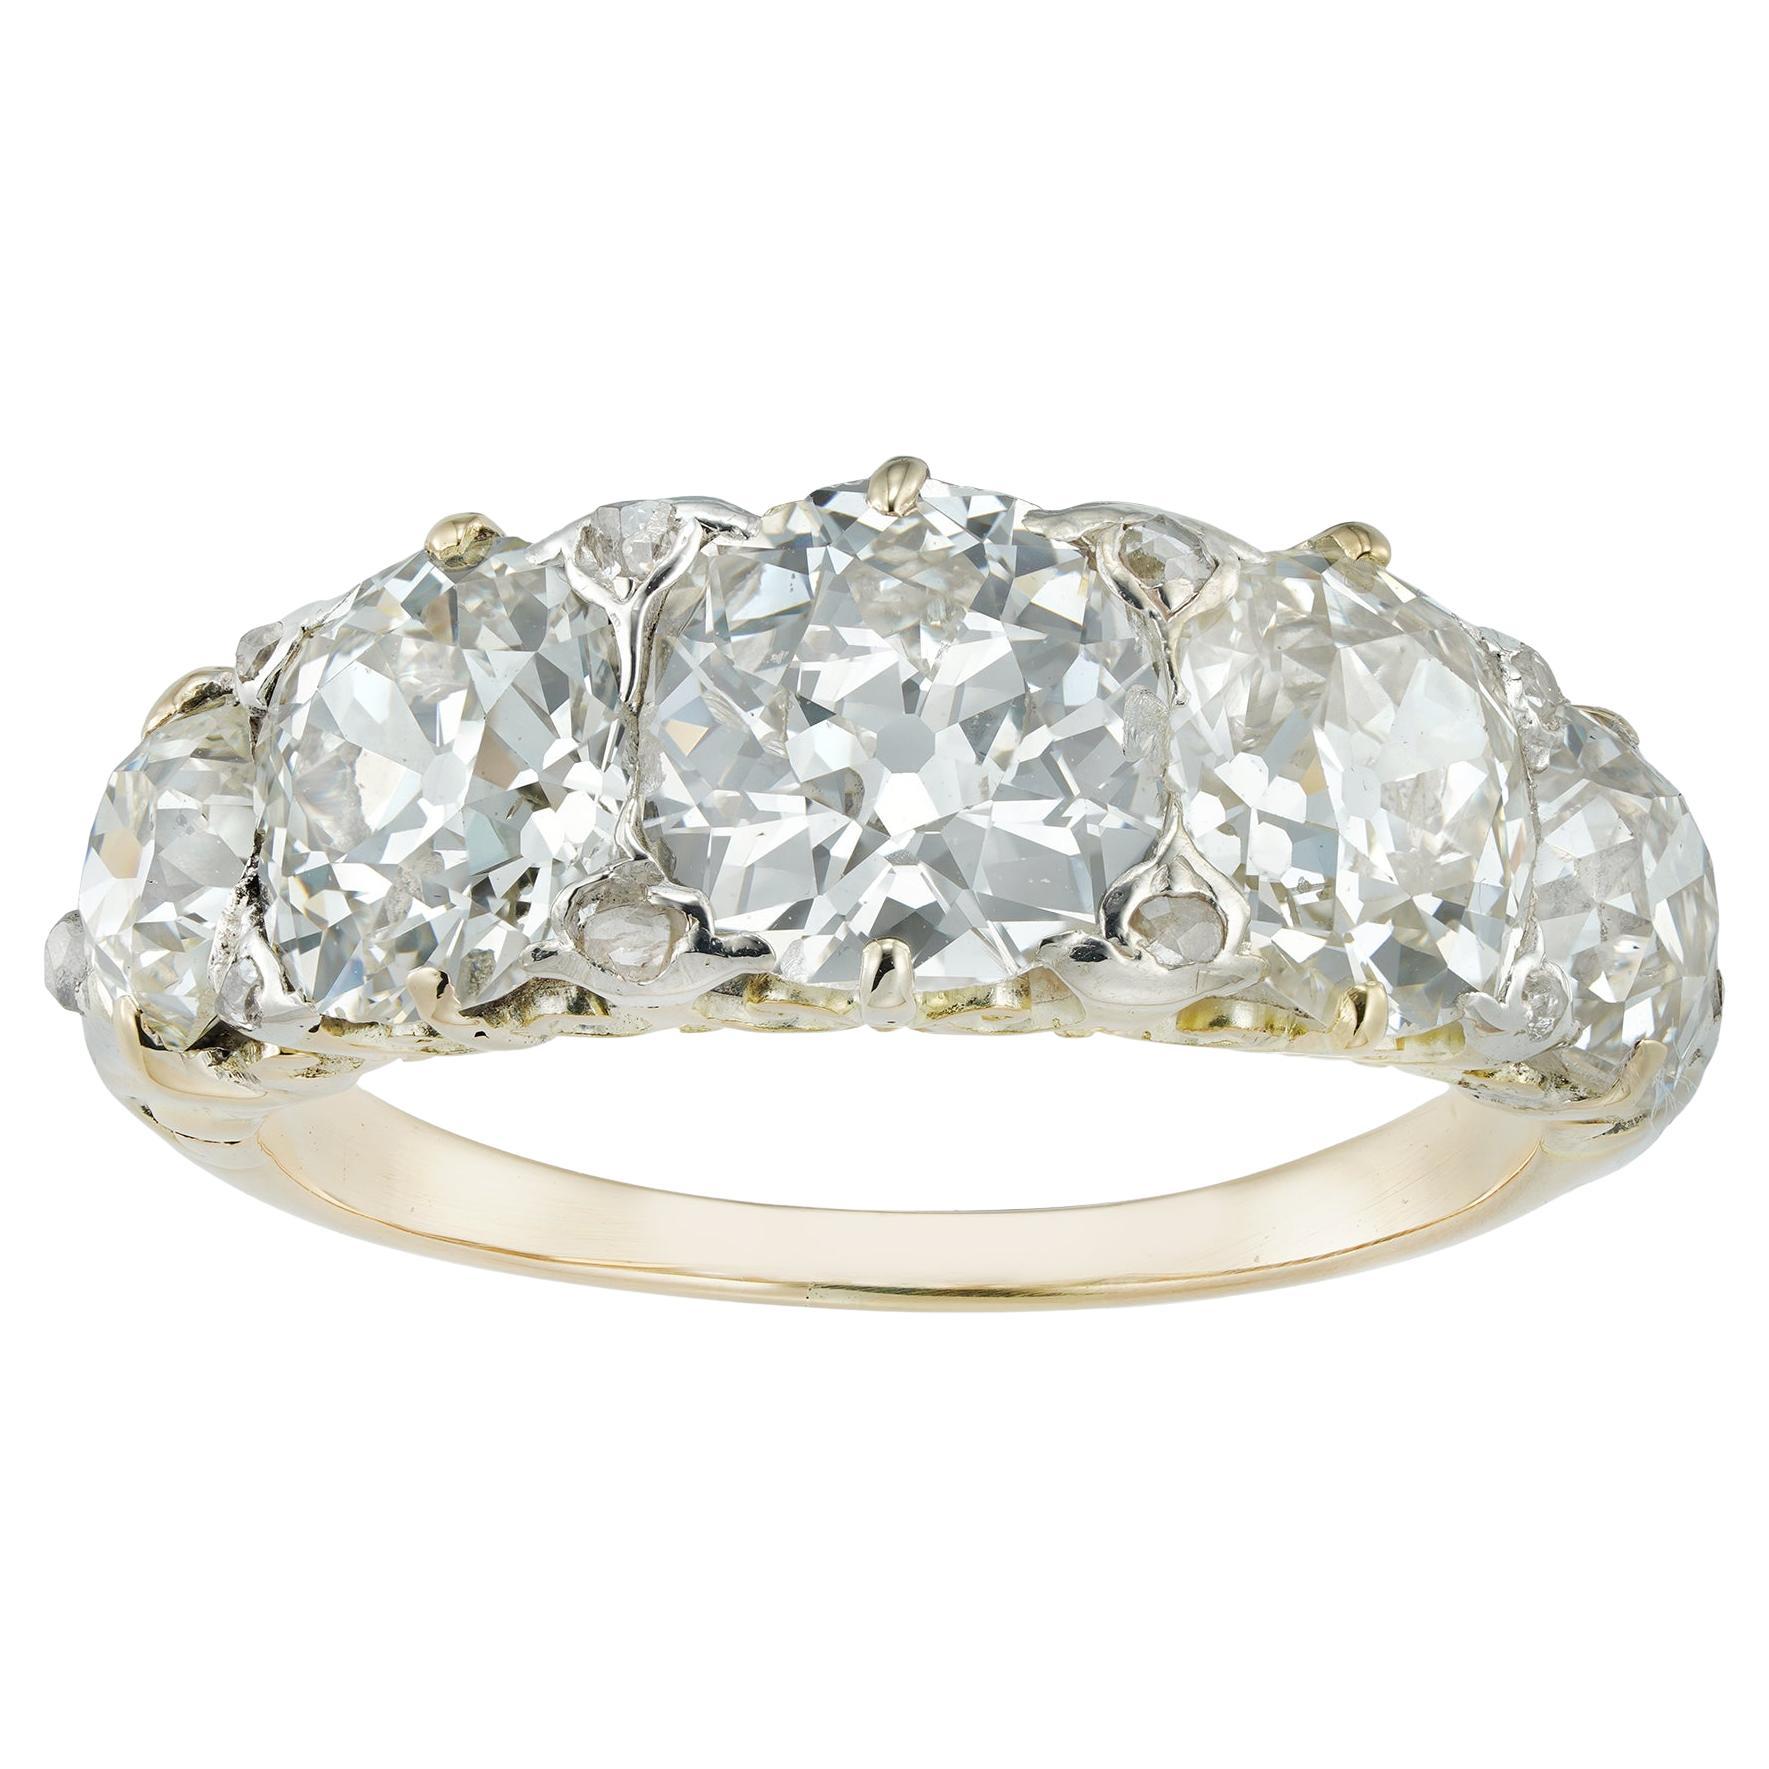 A Late Victorian Five-stone Diamond Ring